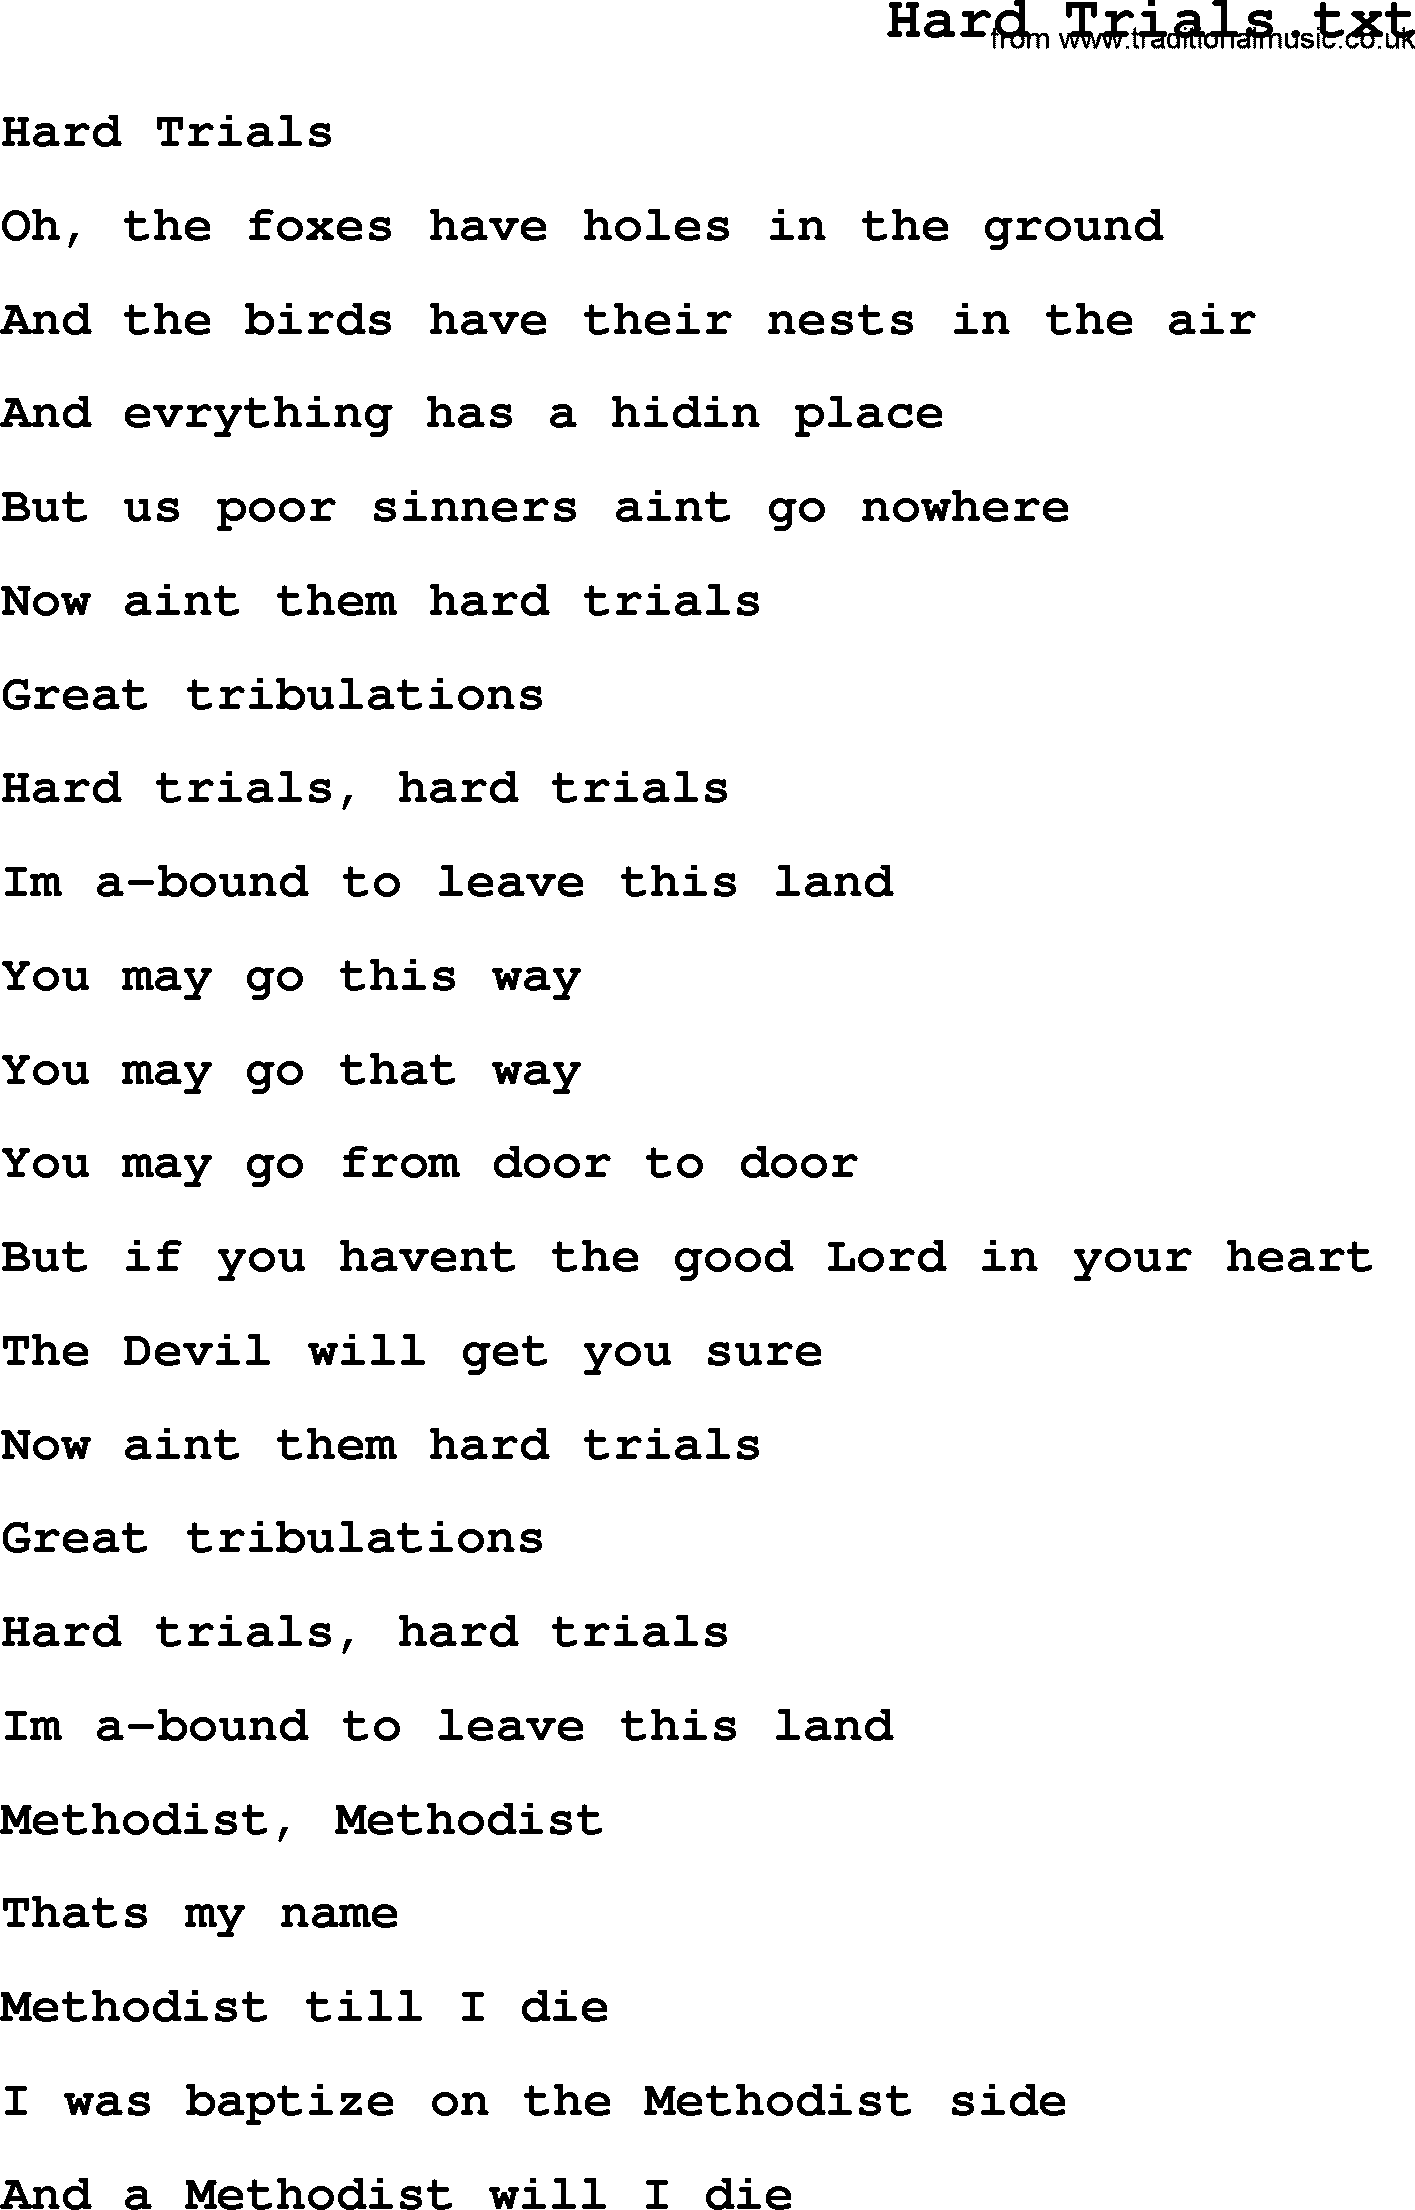 Negro Spiritual Song Lyrics for Hard Trials